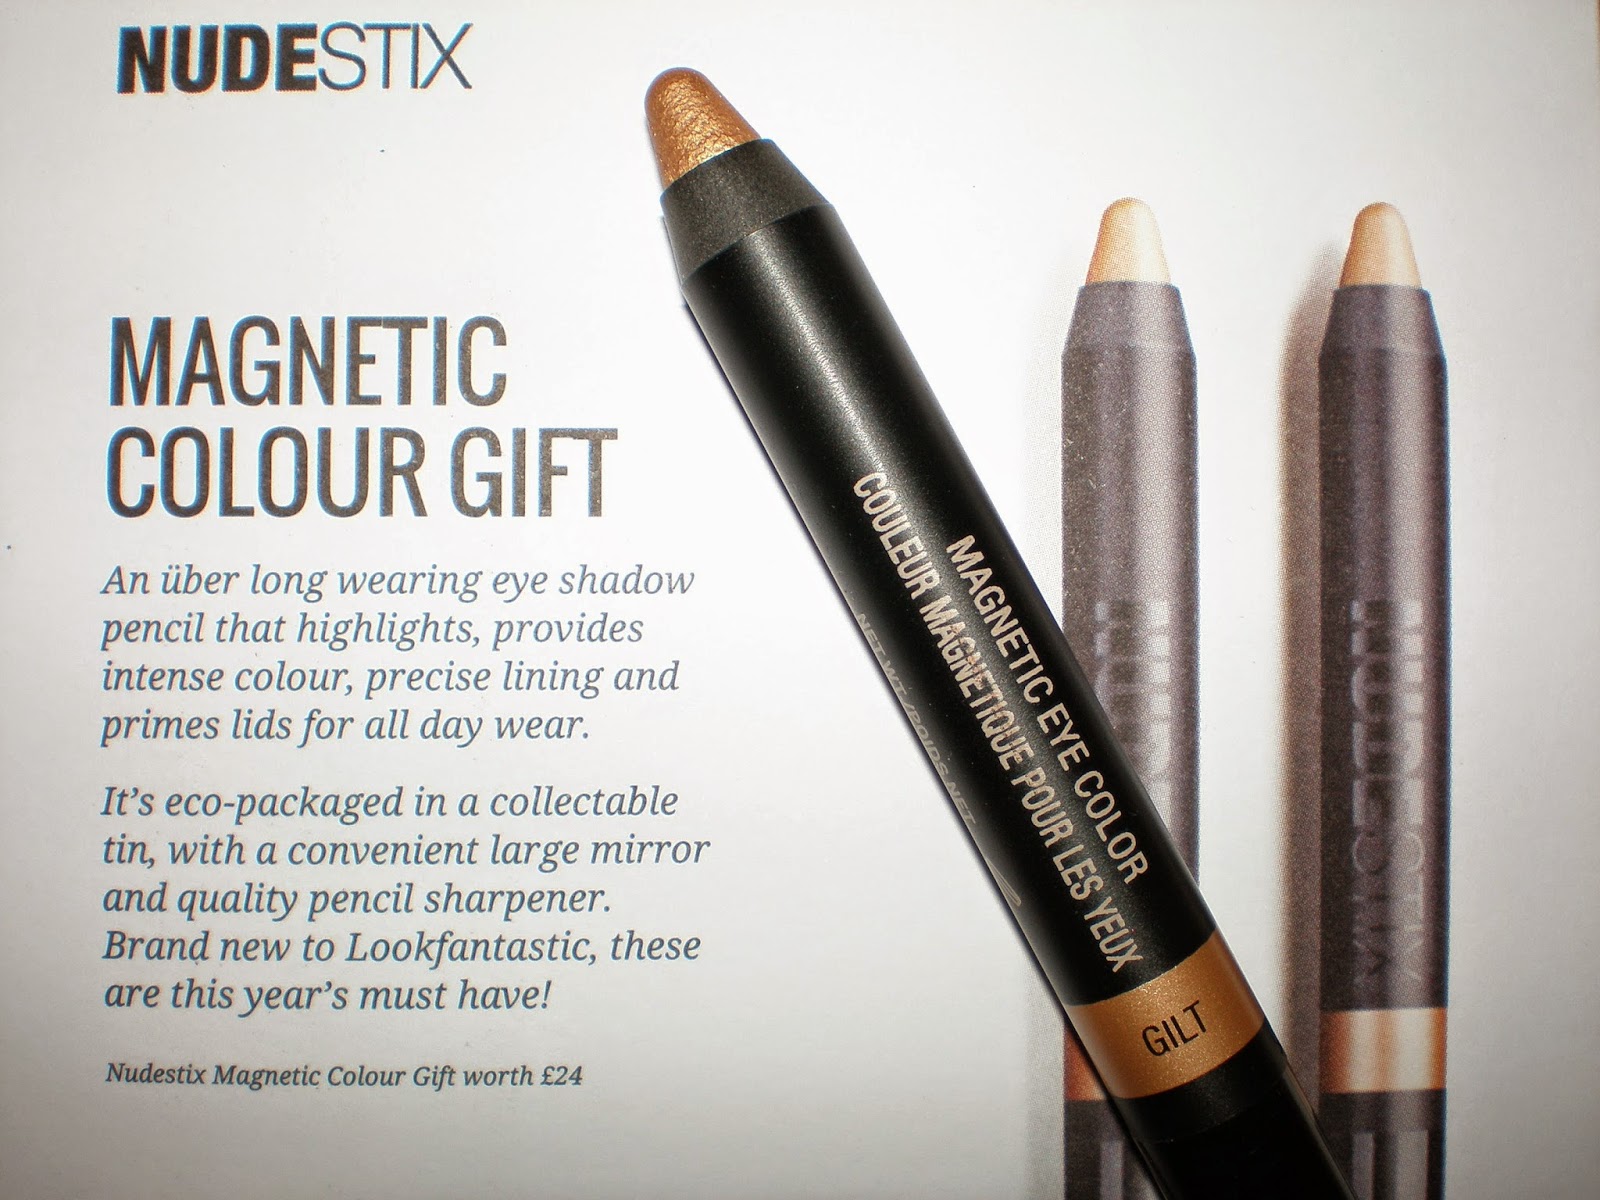 NudeStix Magnetic Colour Eyeshadow Penci in Gilt